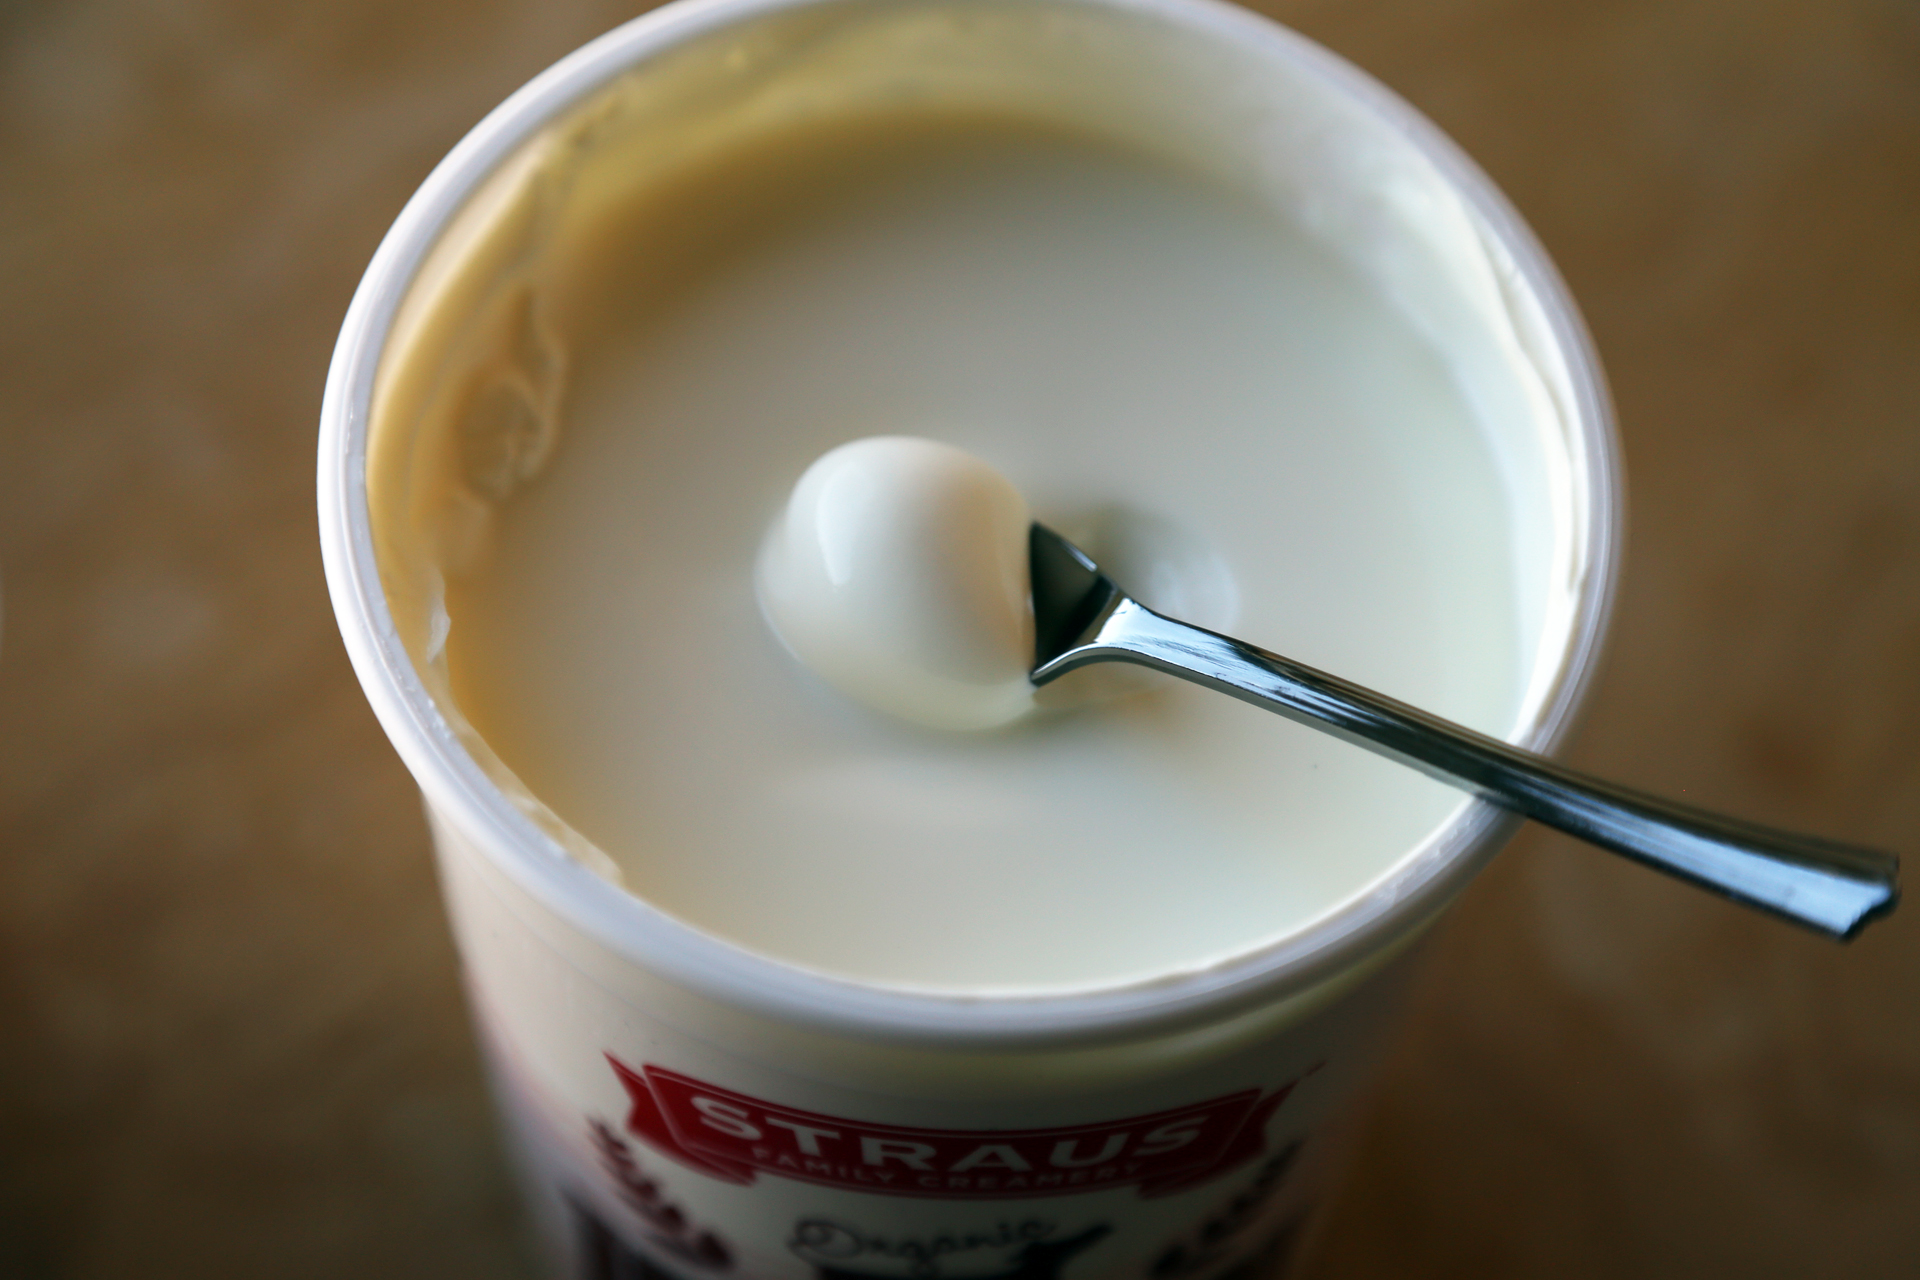 Straus Greek yogurt: Plain